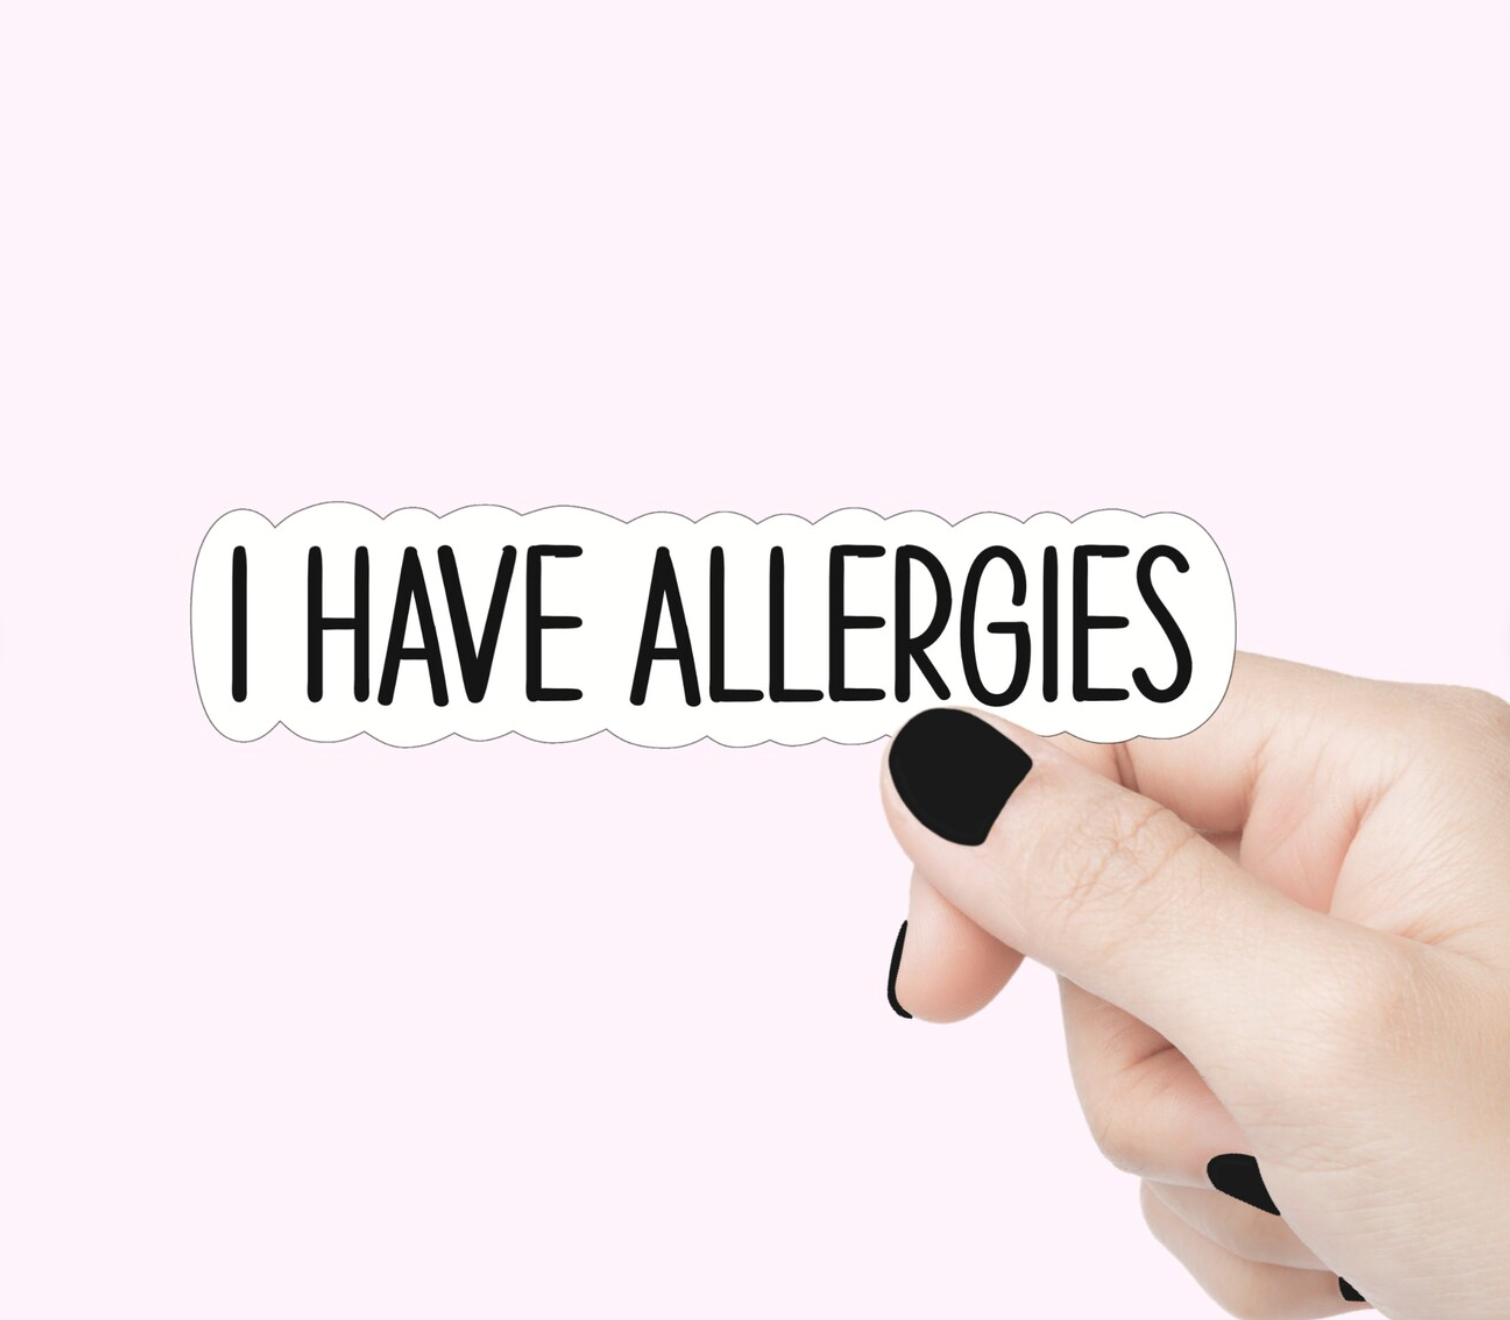 Why we created Allergen-Free Fragrances?